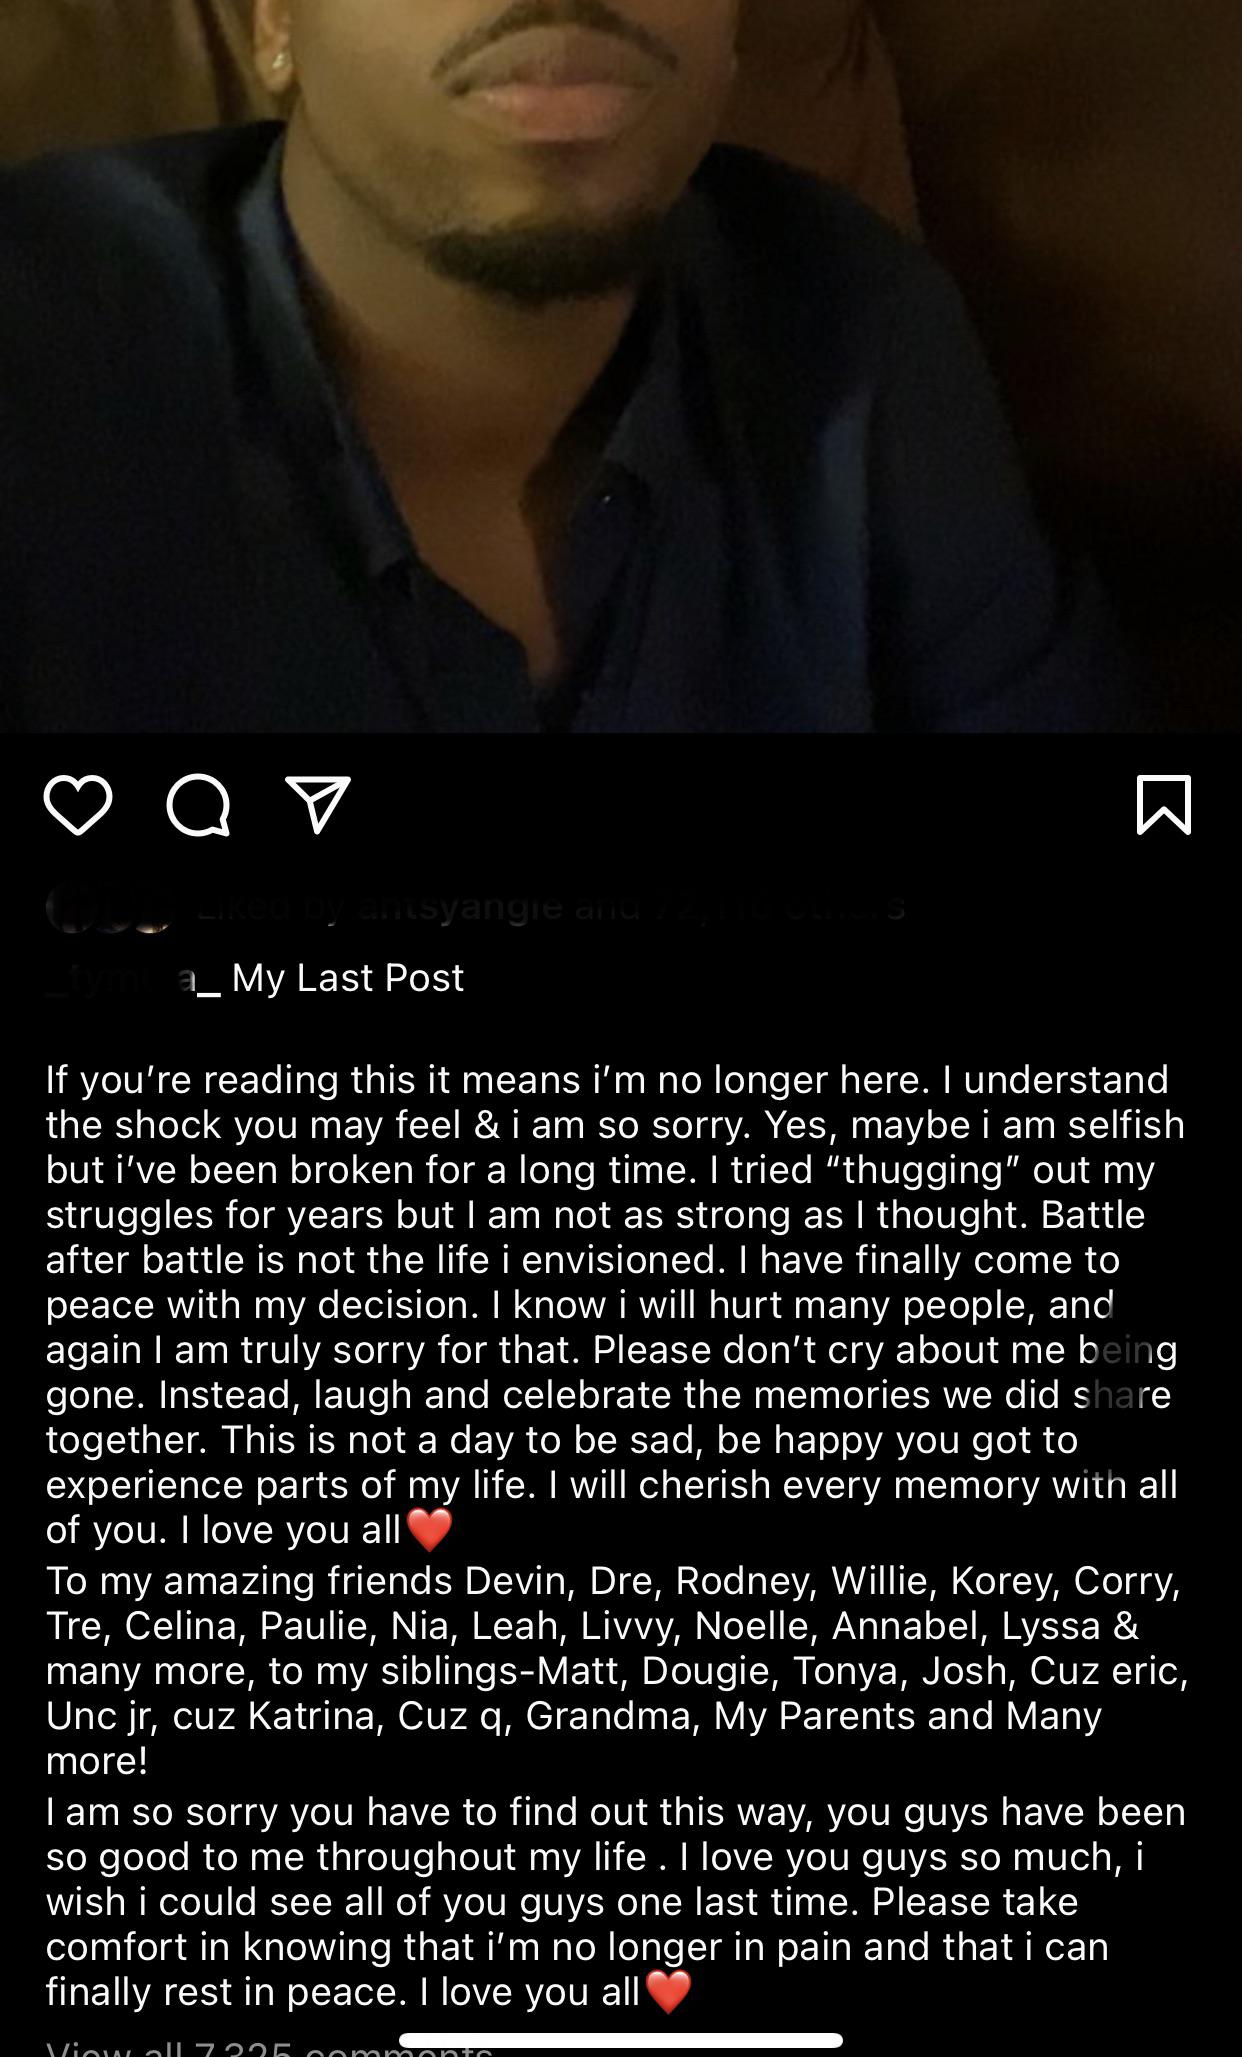 Man posts suicide letter to Instagram before killing himself